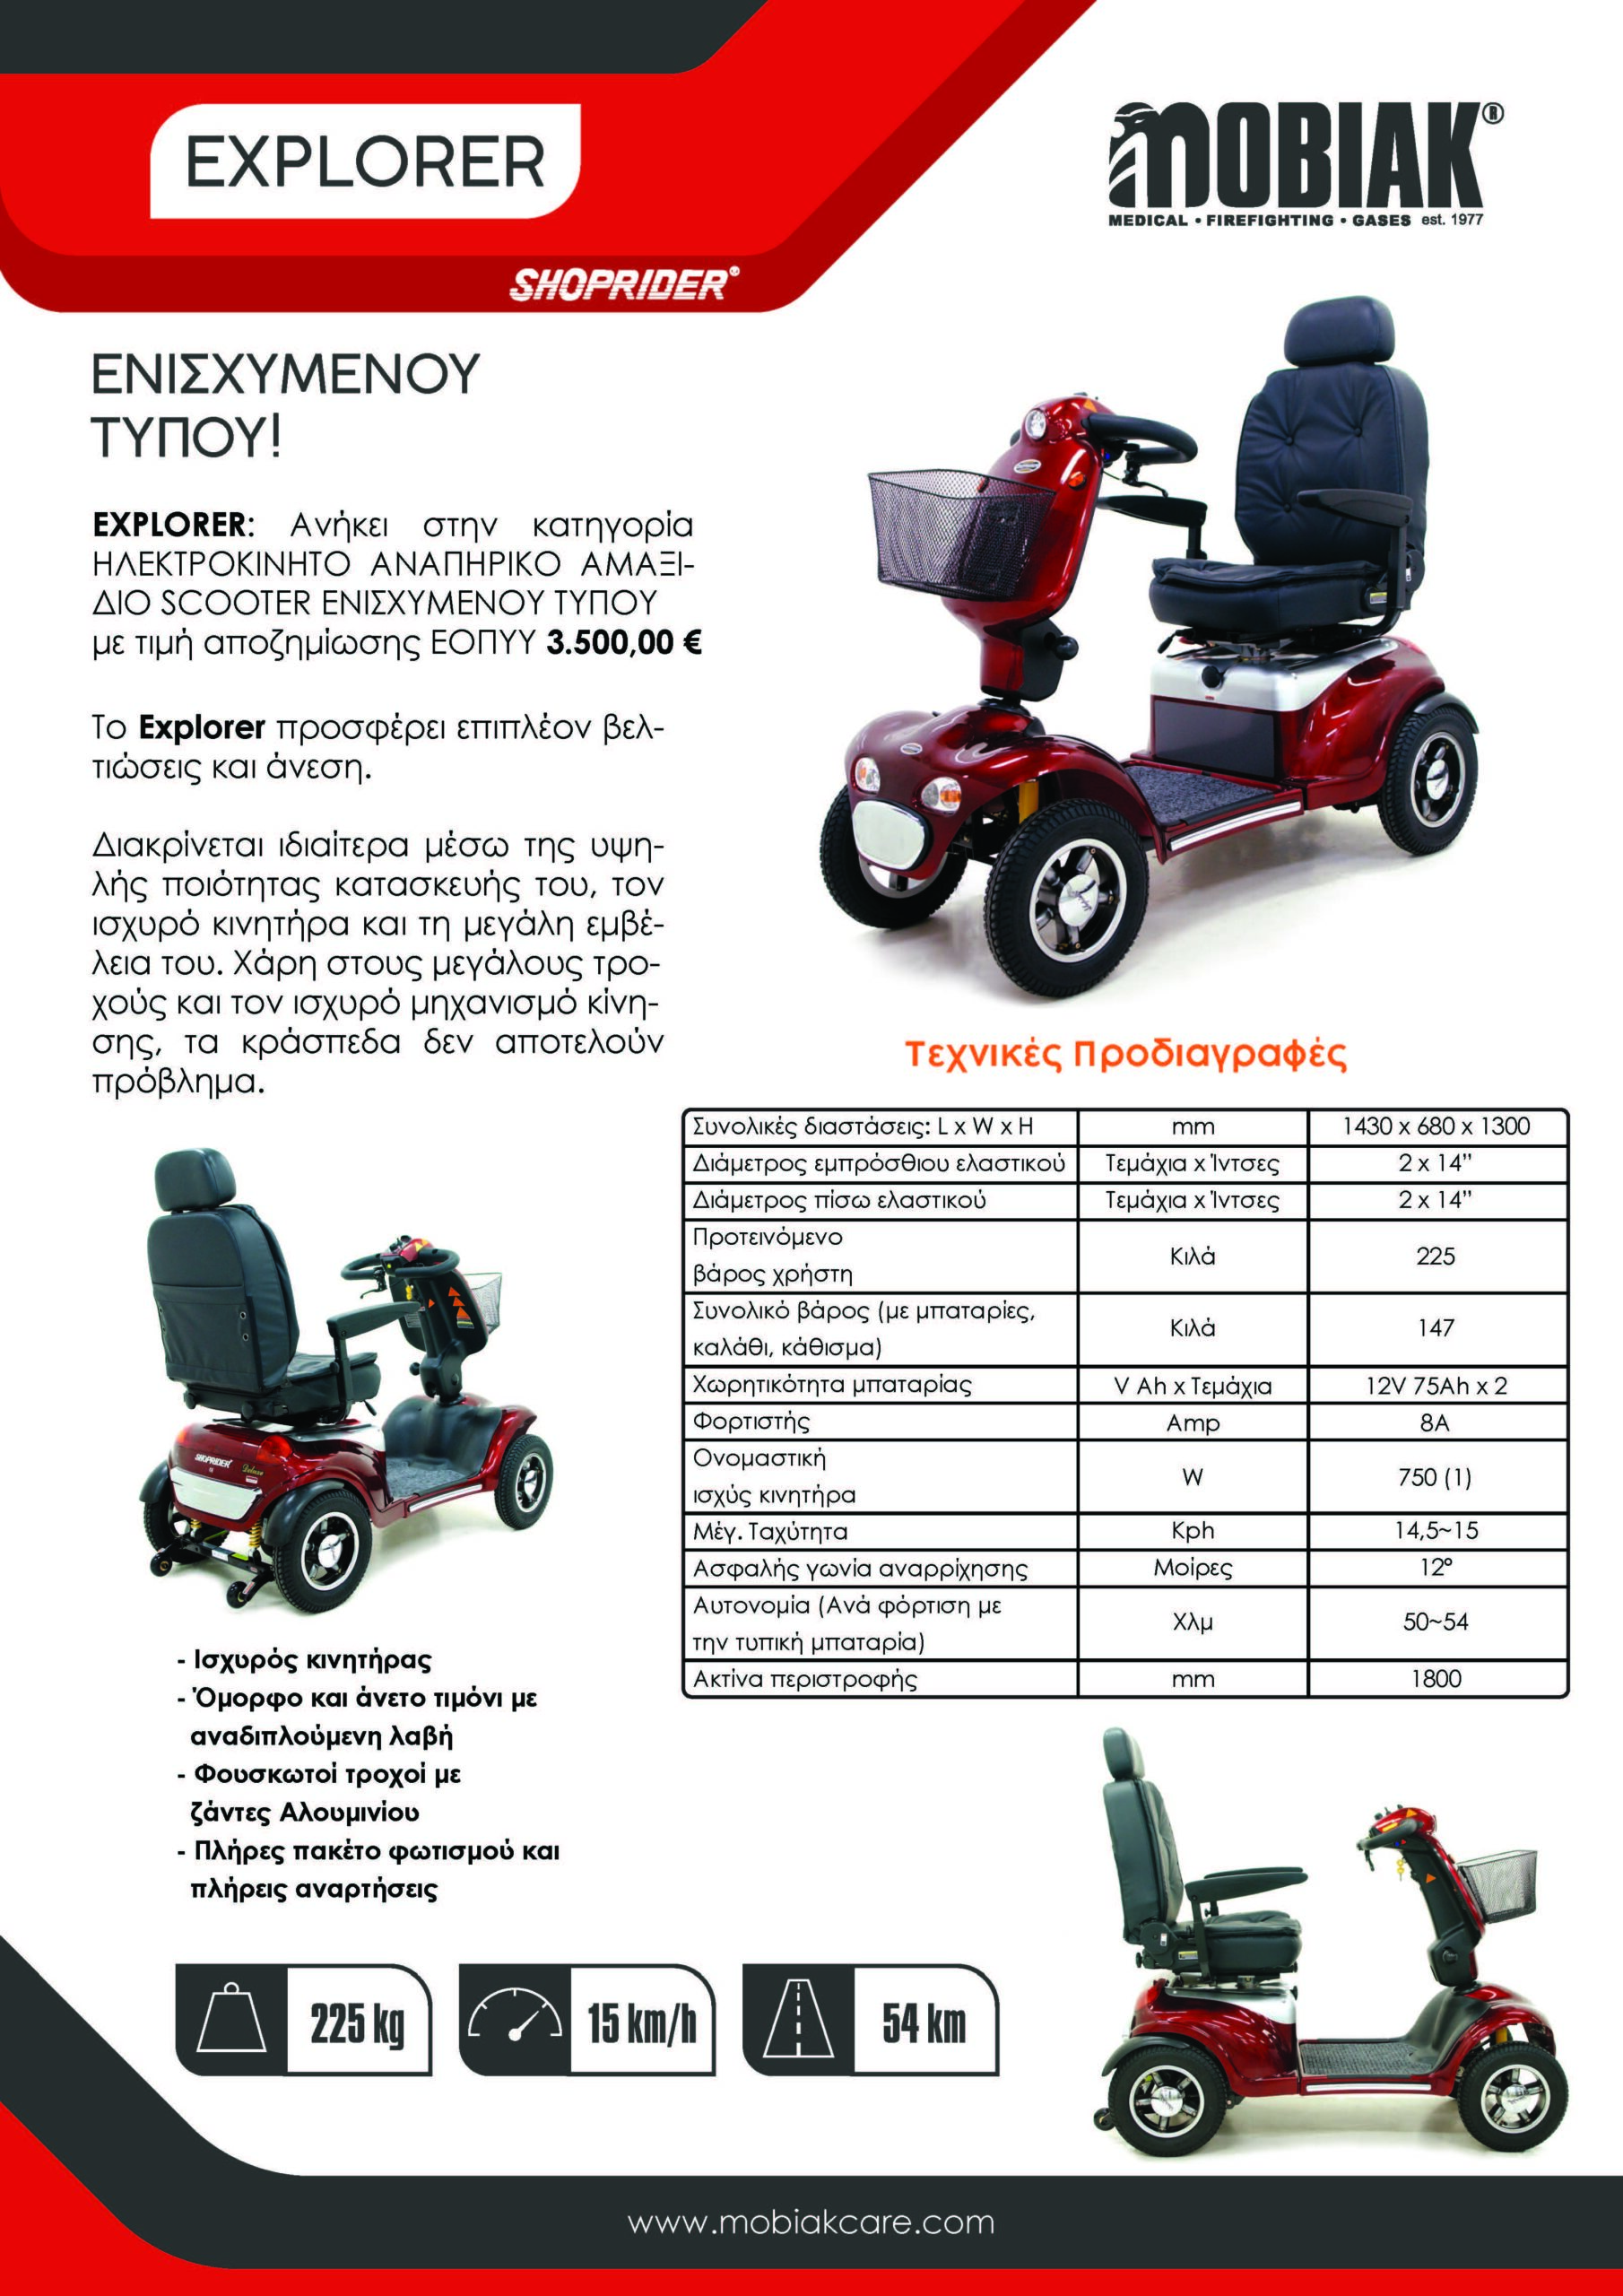 EXPLORER Ηλεκτροκίνητο Αναπηρικό Αμαξίδιο SCOOTER Ενισχυμένου Τύπου